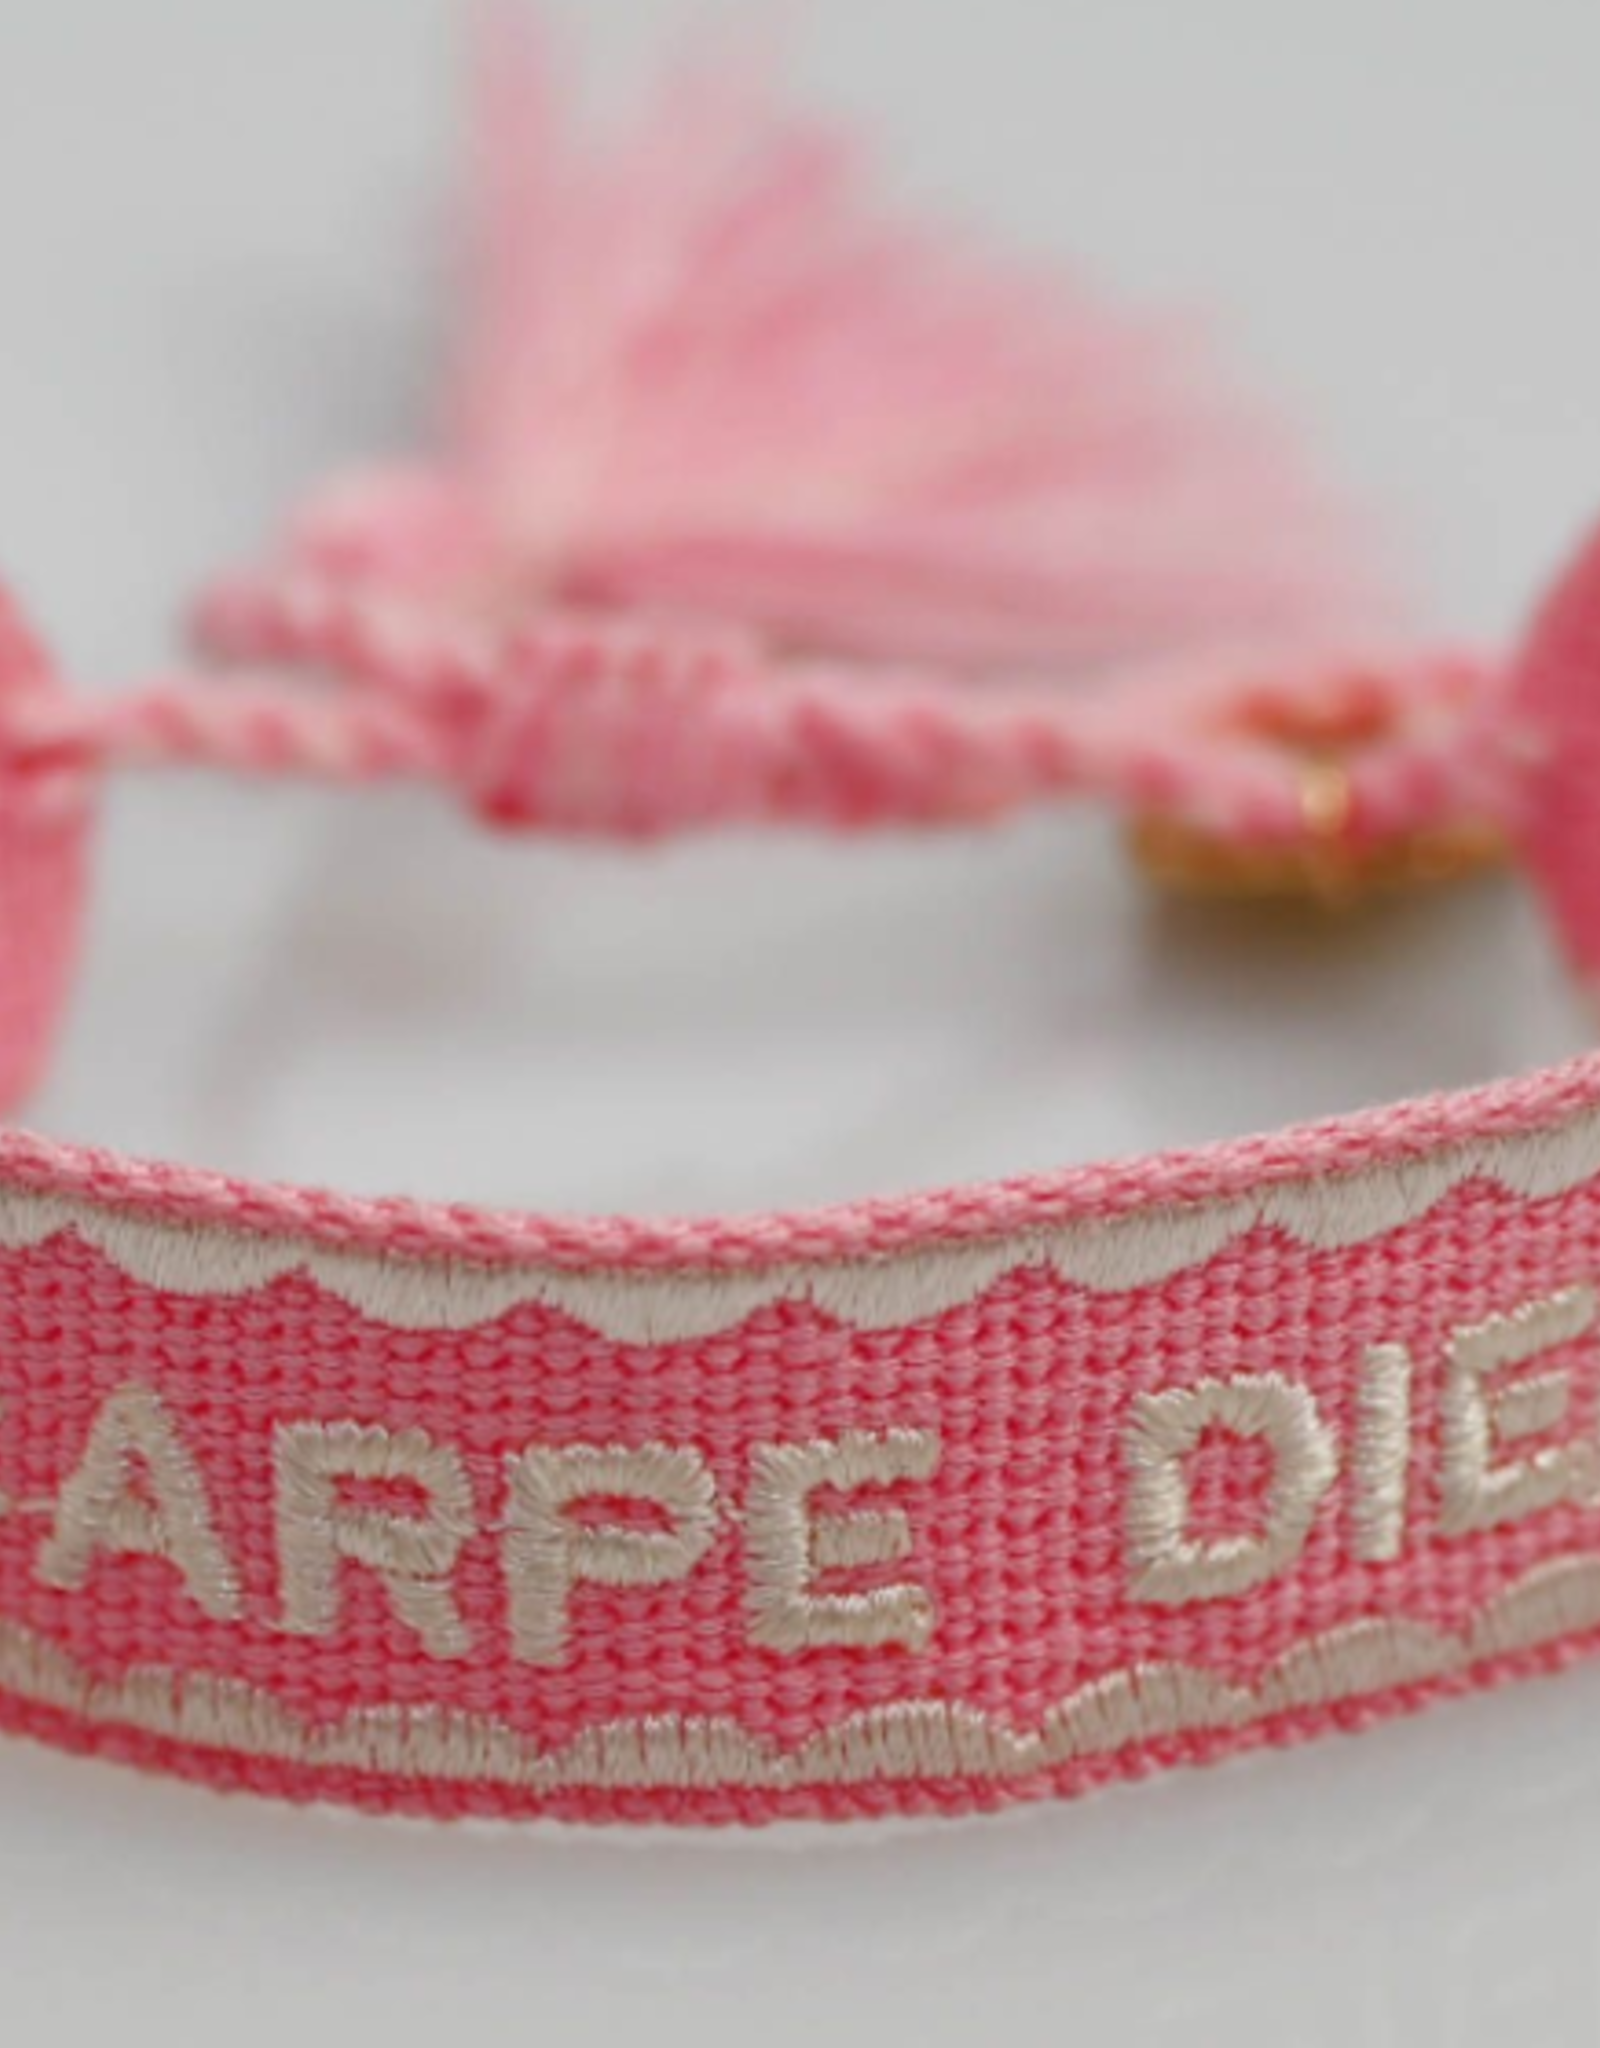 Blond Amsterdam Pink Ribbon Armband "Carpe Diem" - Blond Amsterdam